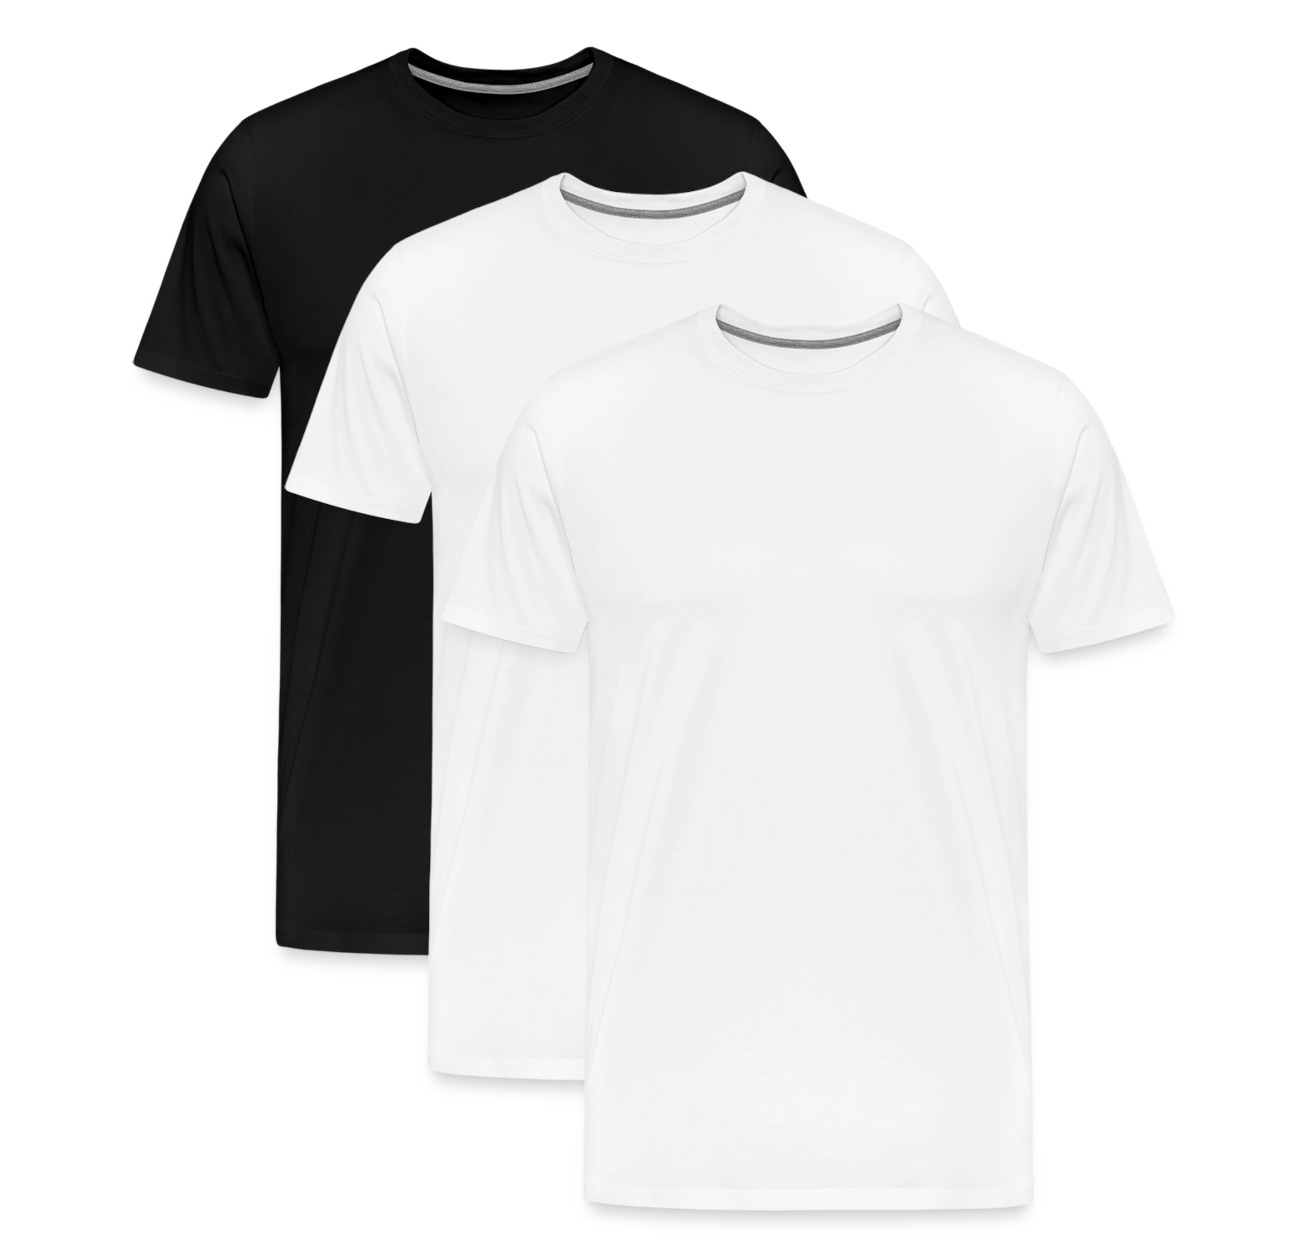 Fluent Tee Variety 3-Pack (Size 3XL) - Men's Premium T-Shirt from fluentclothing.com